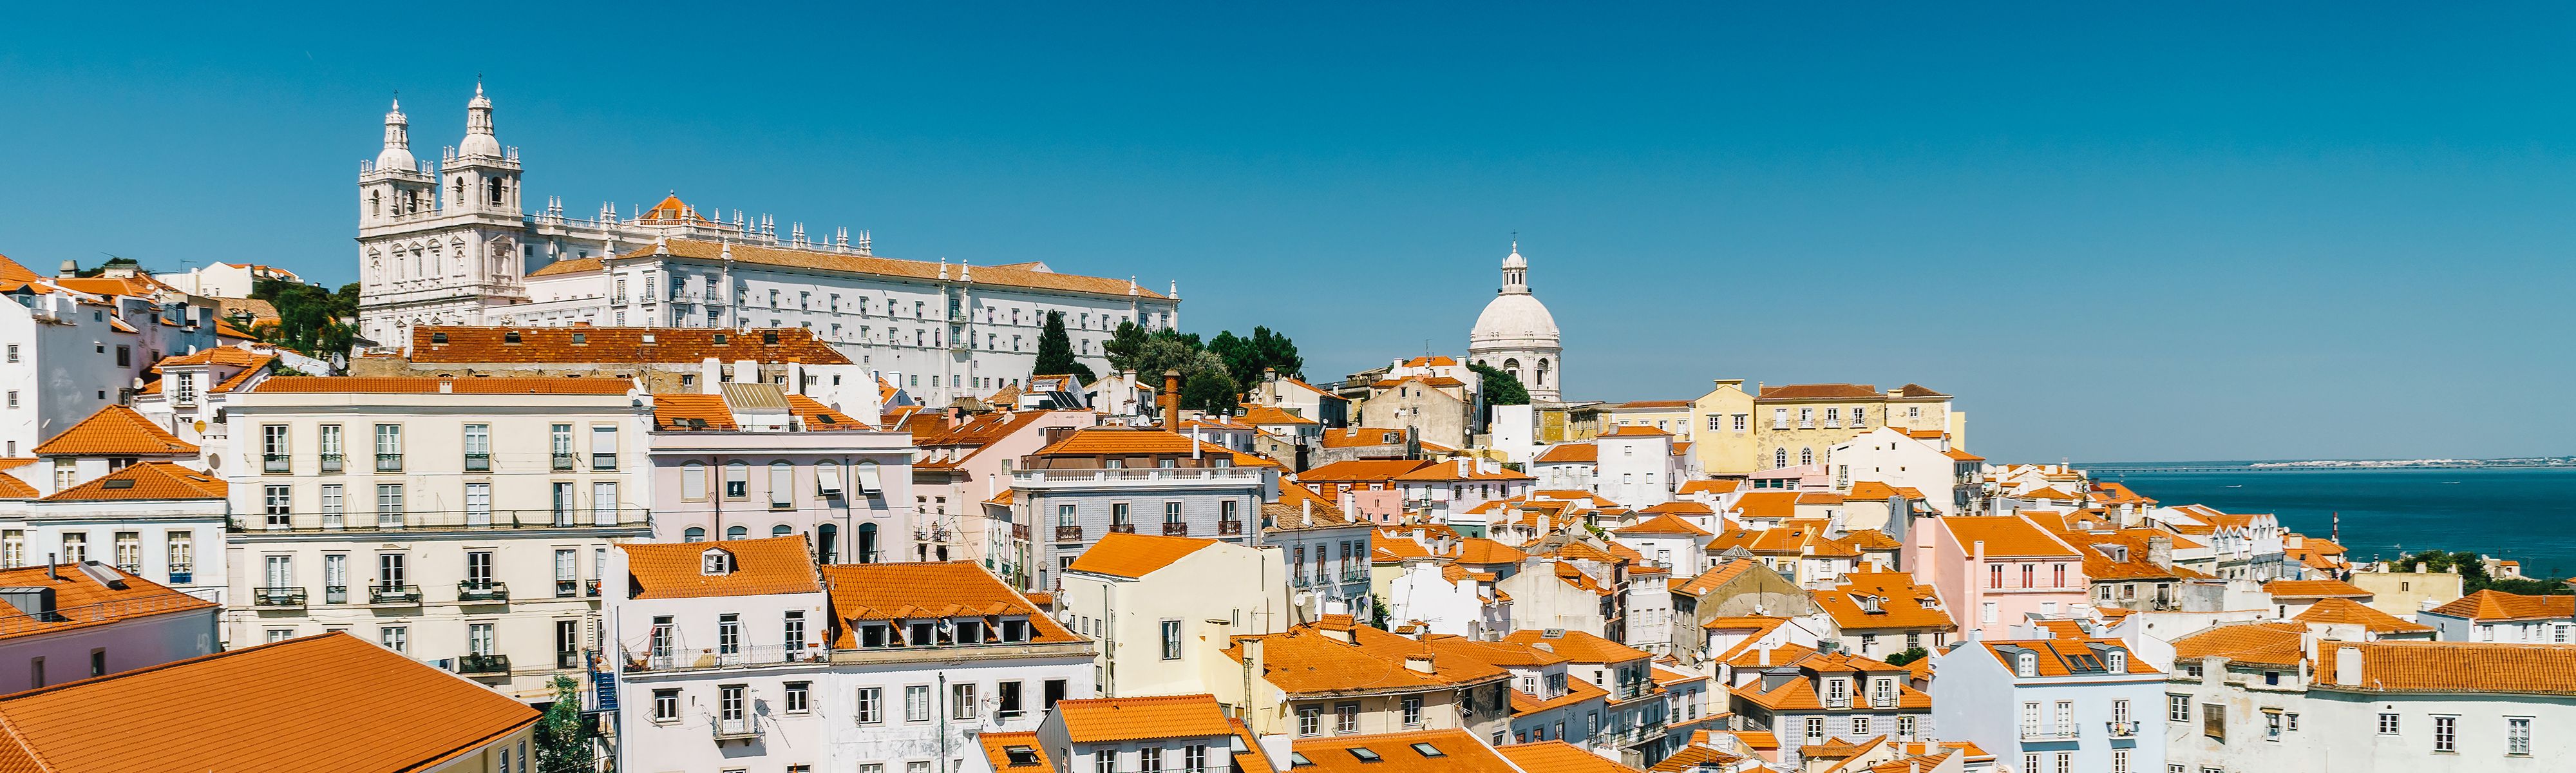 travel agency in lisbon portugal